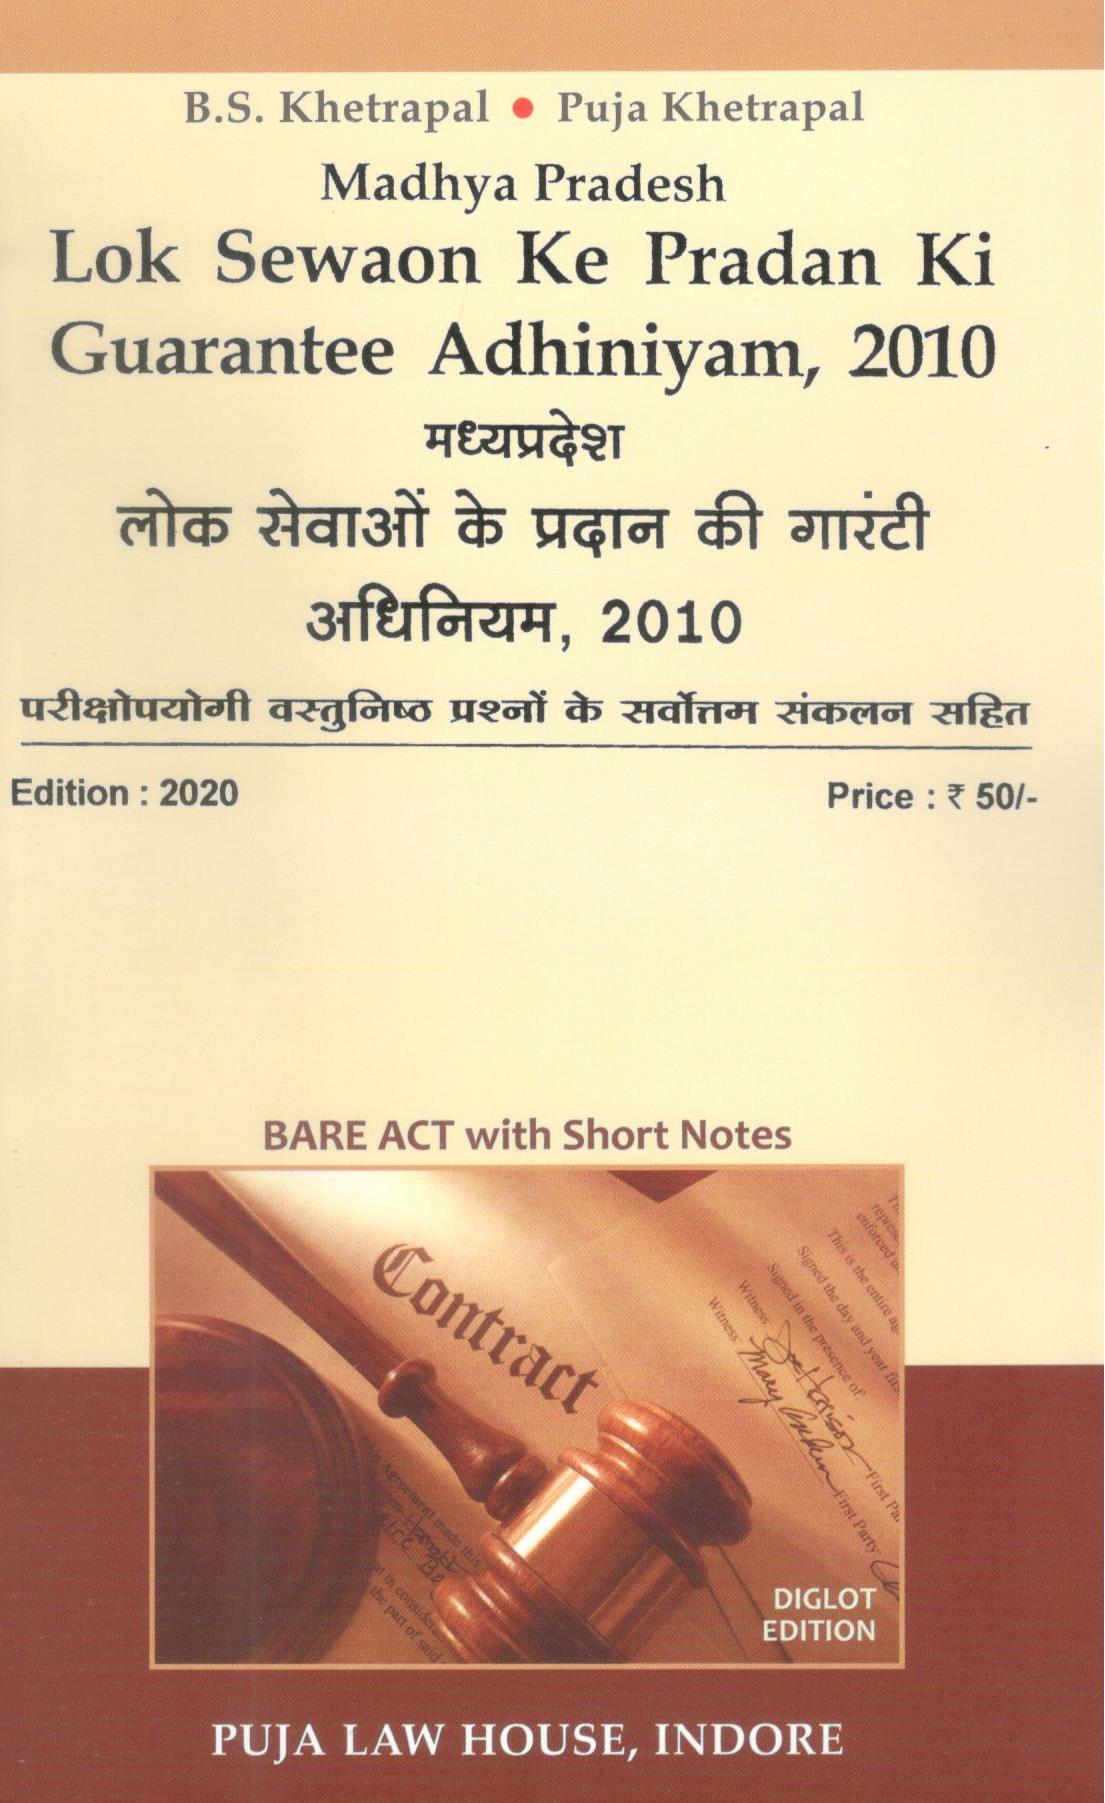  Buy मध्य प्रदेश लोक सेवाओ के प्रदान की गारंटी अधिनियम, 2010 / Madhya Pradesh Lok Sewaon ke Pradan ki Guarantee Adhiniyam, 2010